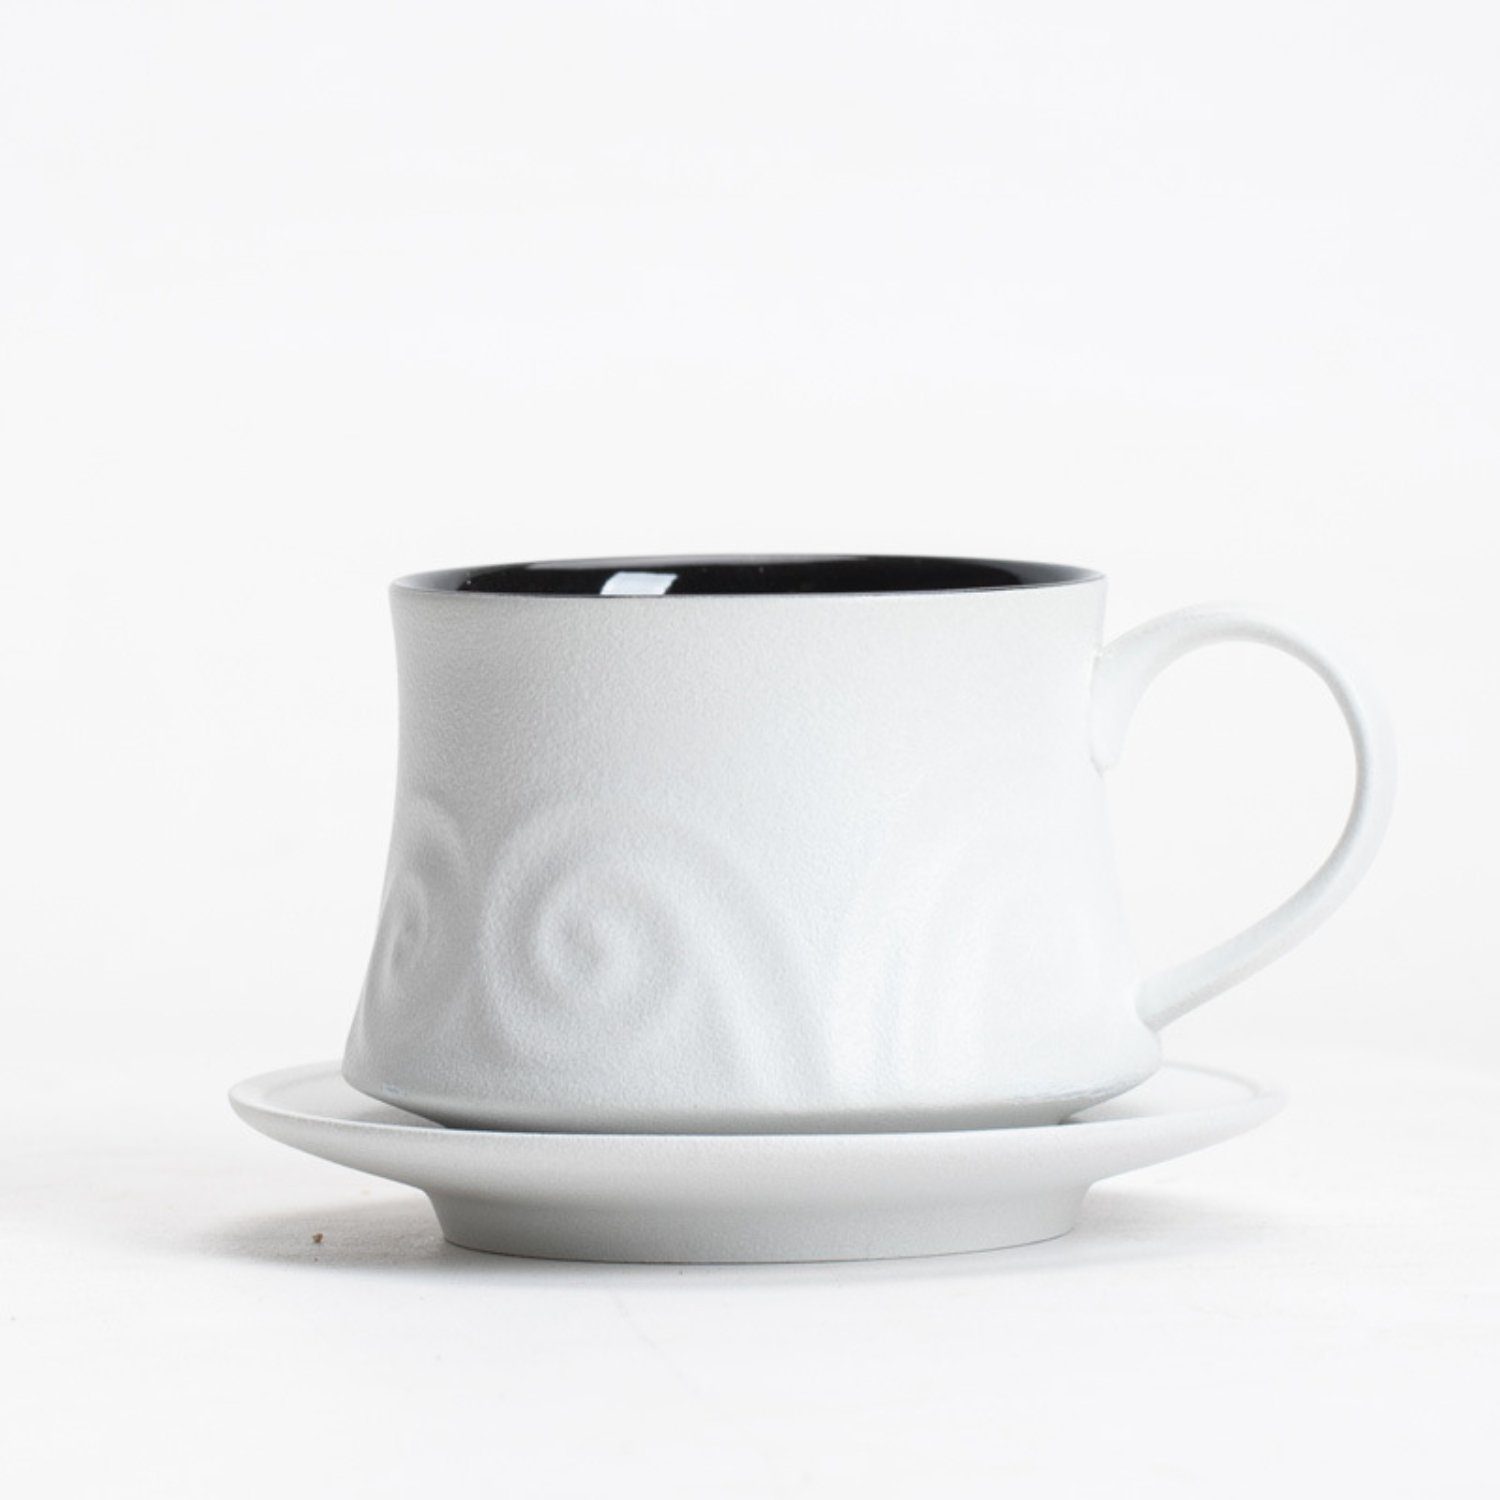 HOMEIDEAS Tasse, Keramik, Kaffeetasse aus Porzellan, Tasse Steingut, Vintage Weiß